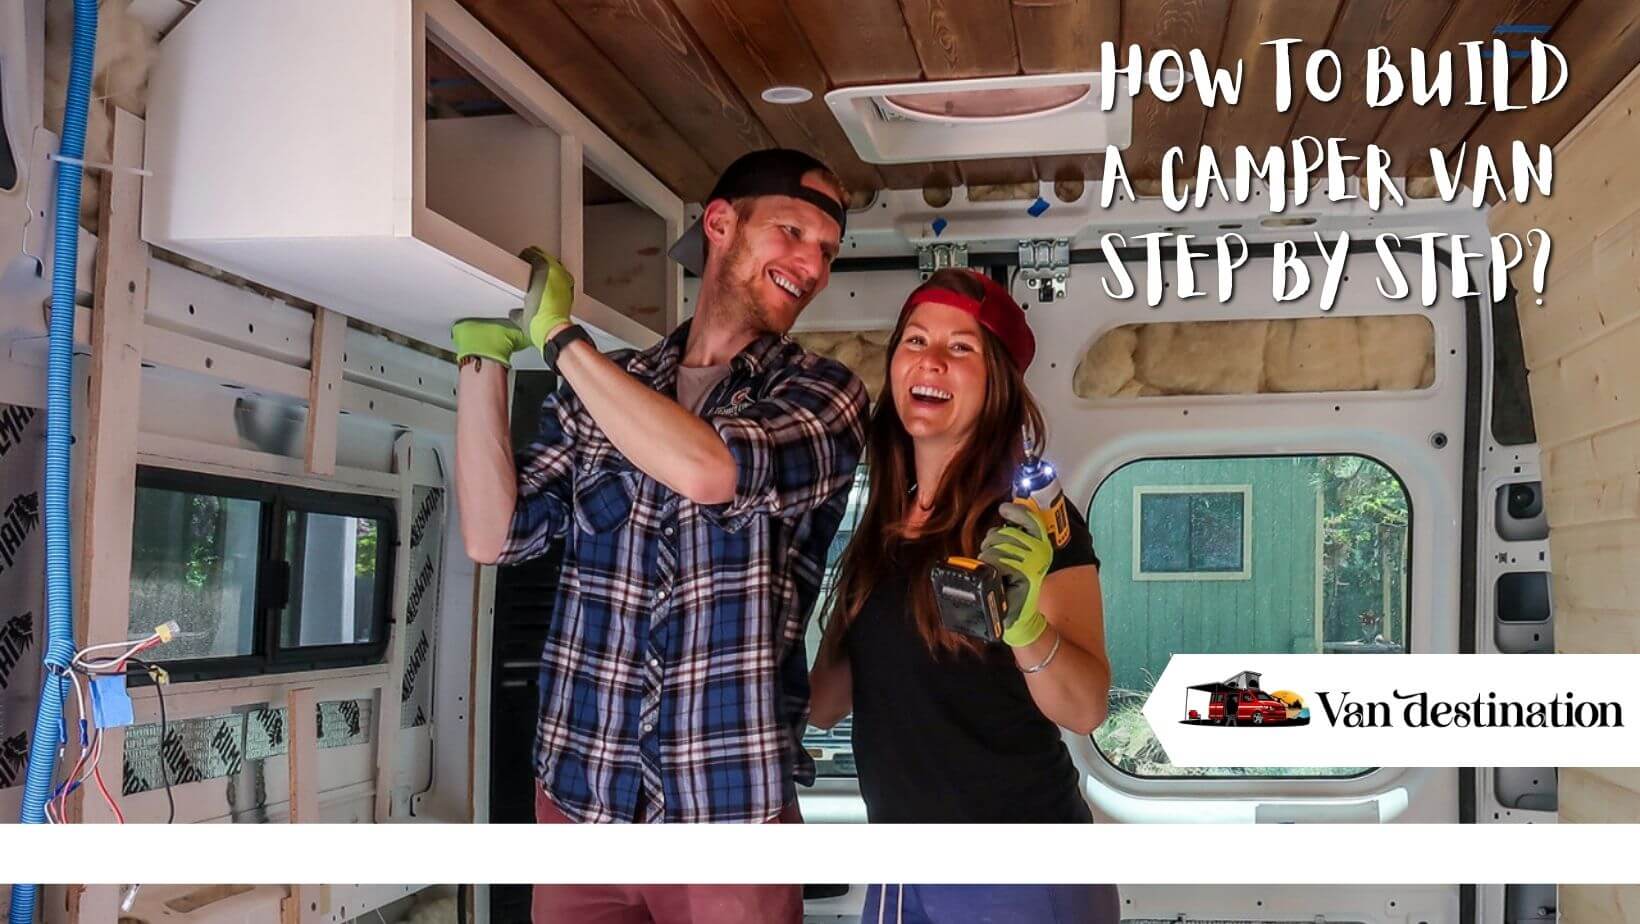 How To Build a Camper Van Step By Step